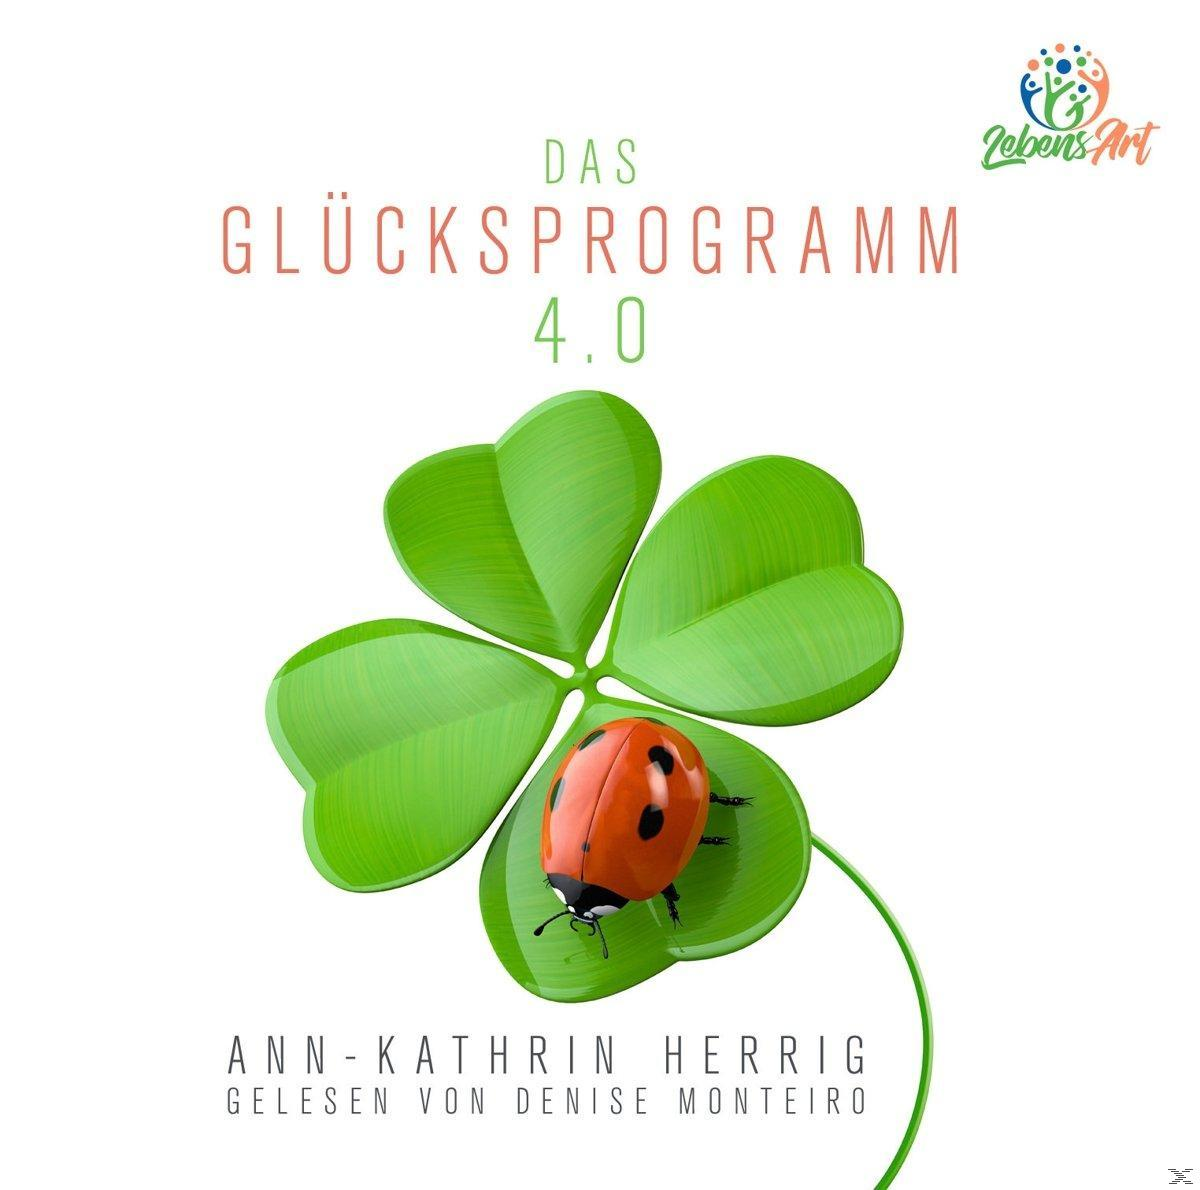 Glücksprogramm - (CD) Das - 4.0 Ann-kathrin Herrig